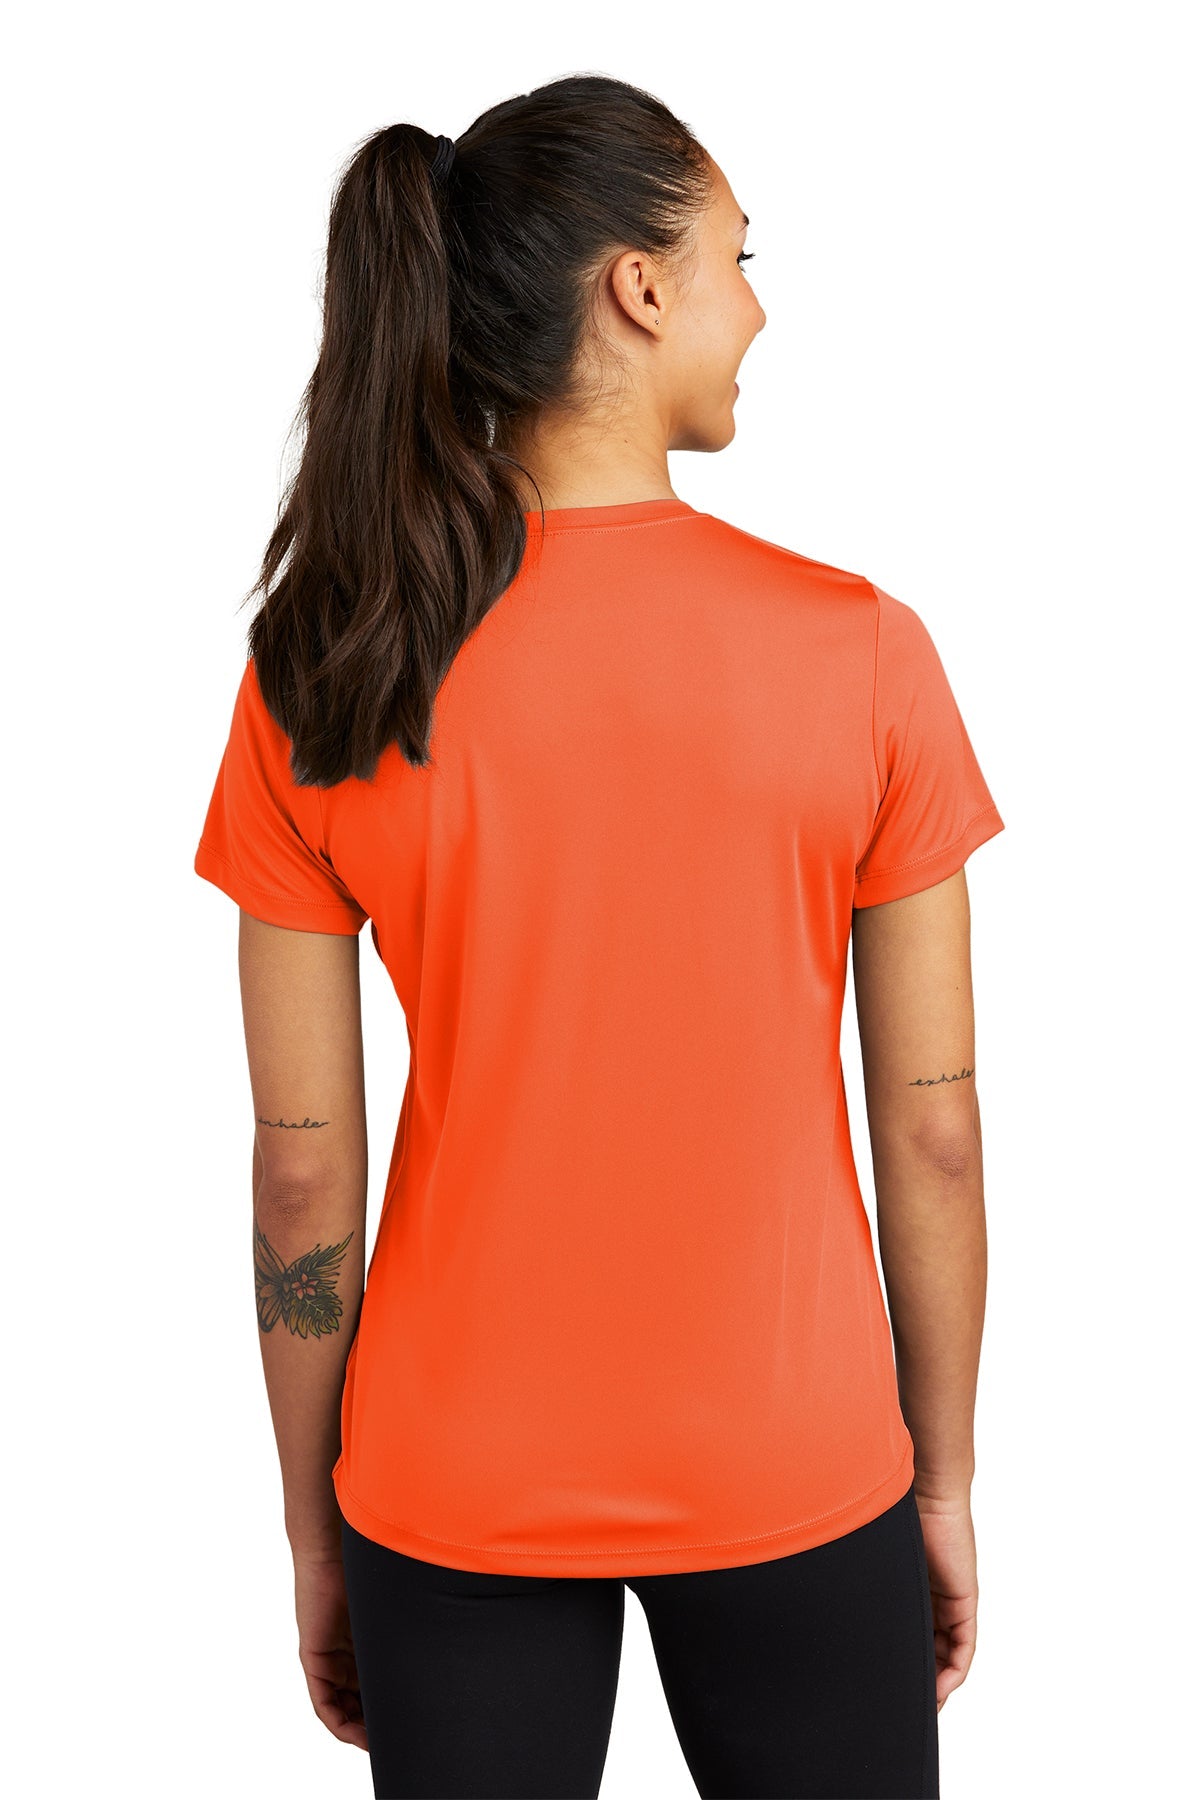 Sport-Tek Ladies PosiCharge Customized Competitor Tee's, Neon Orange